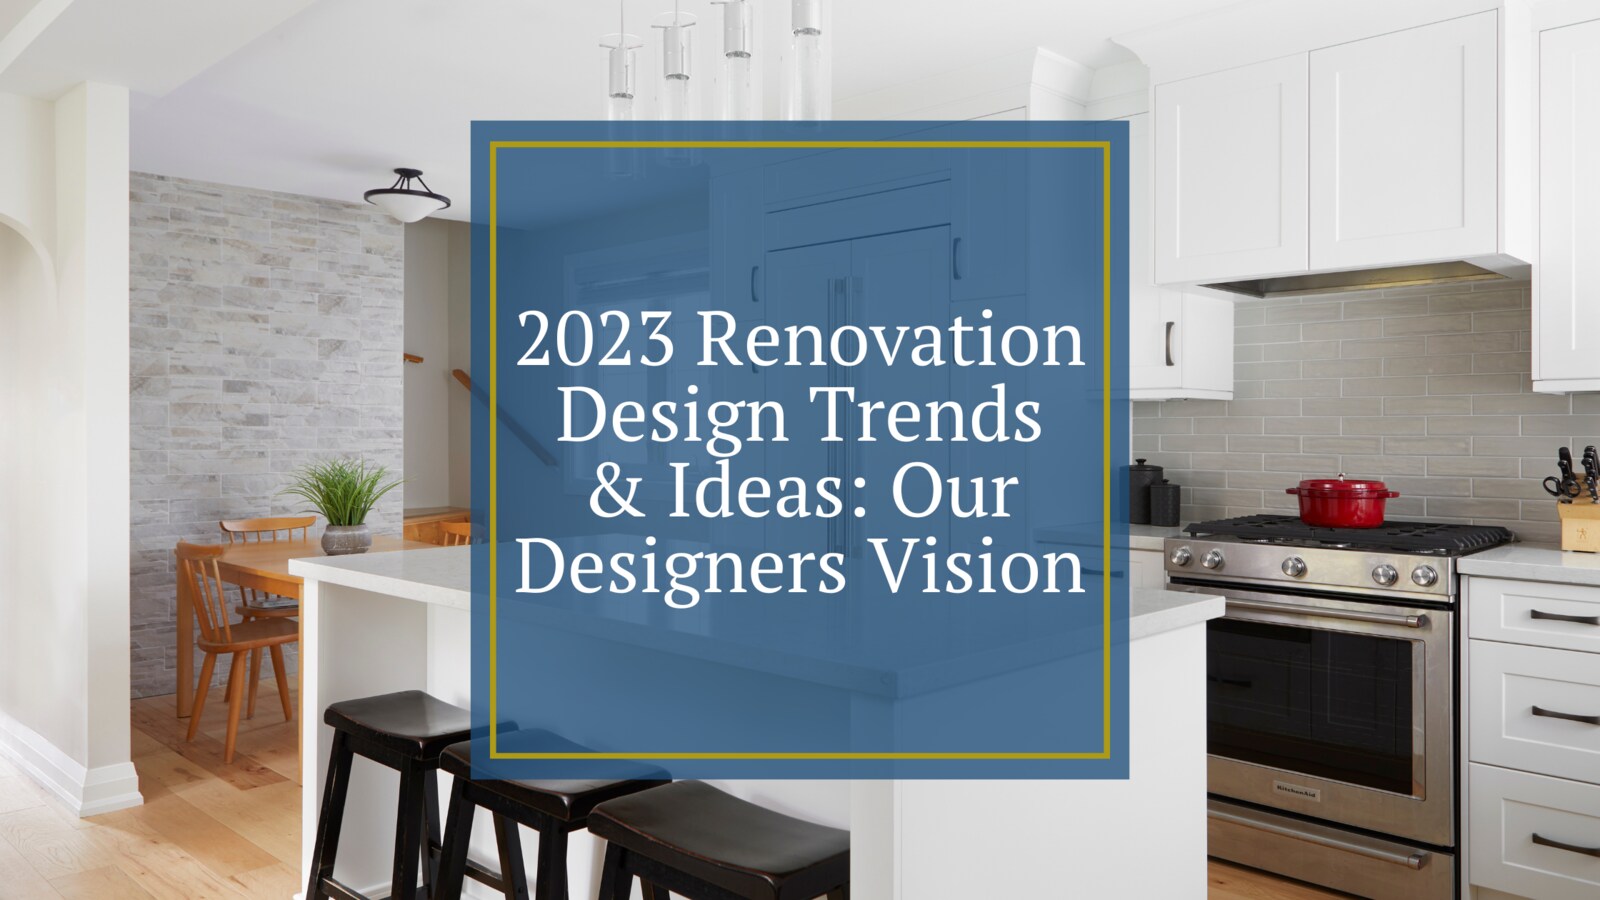 2023 Renovation Design Trends & Ideas Our Designers Vision